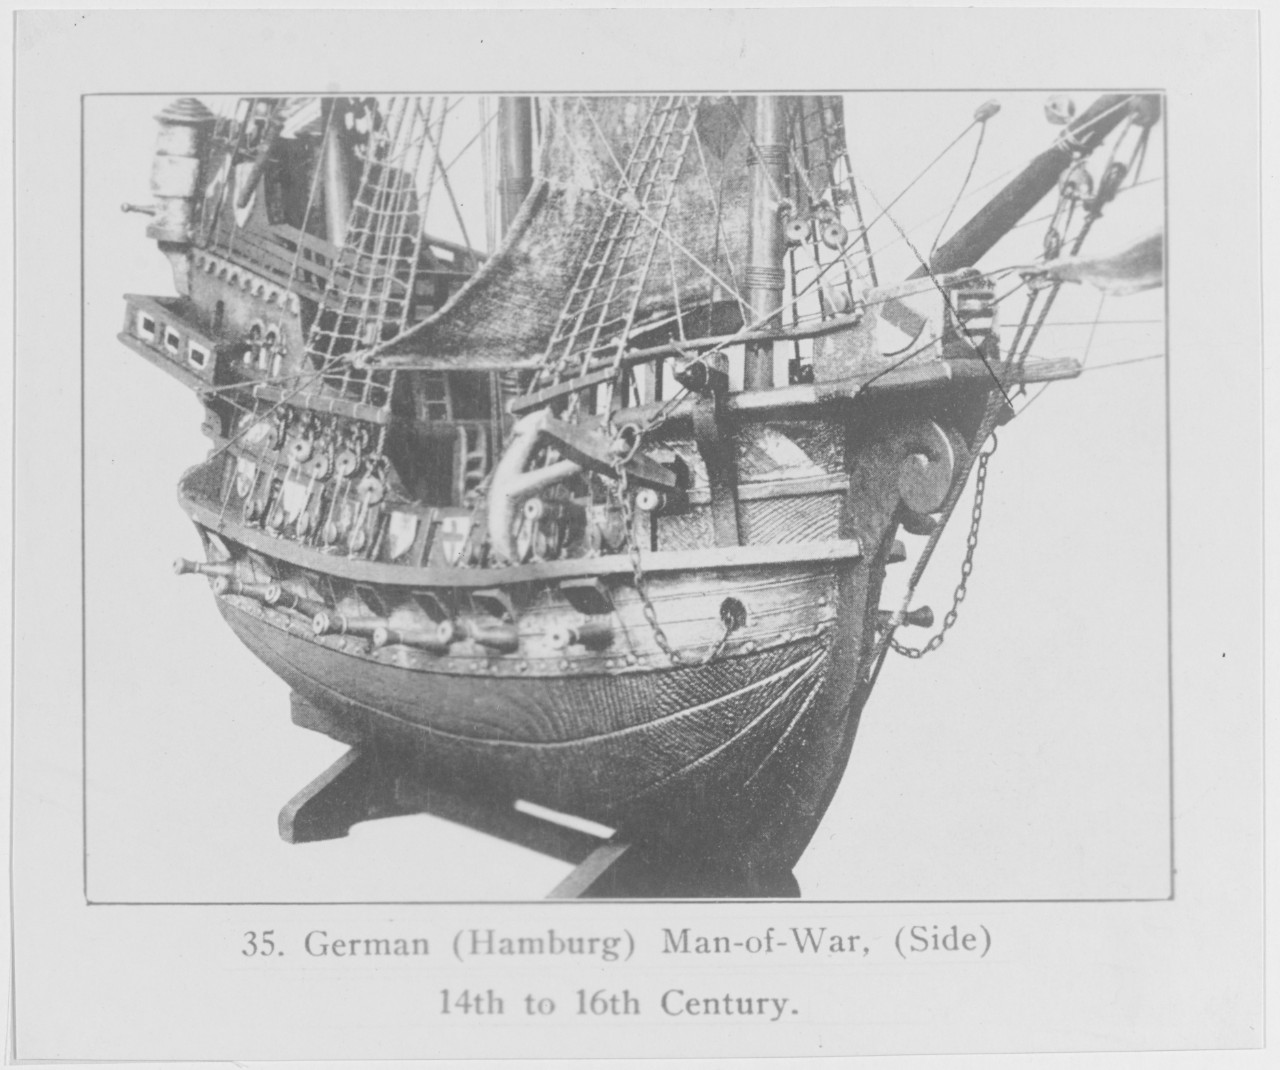 Model of German (Hamburg) Man-of-War, (Side).  14th to 16th Century